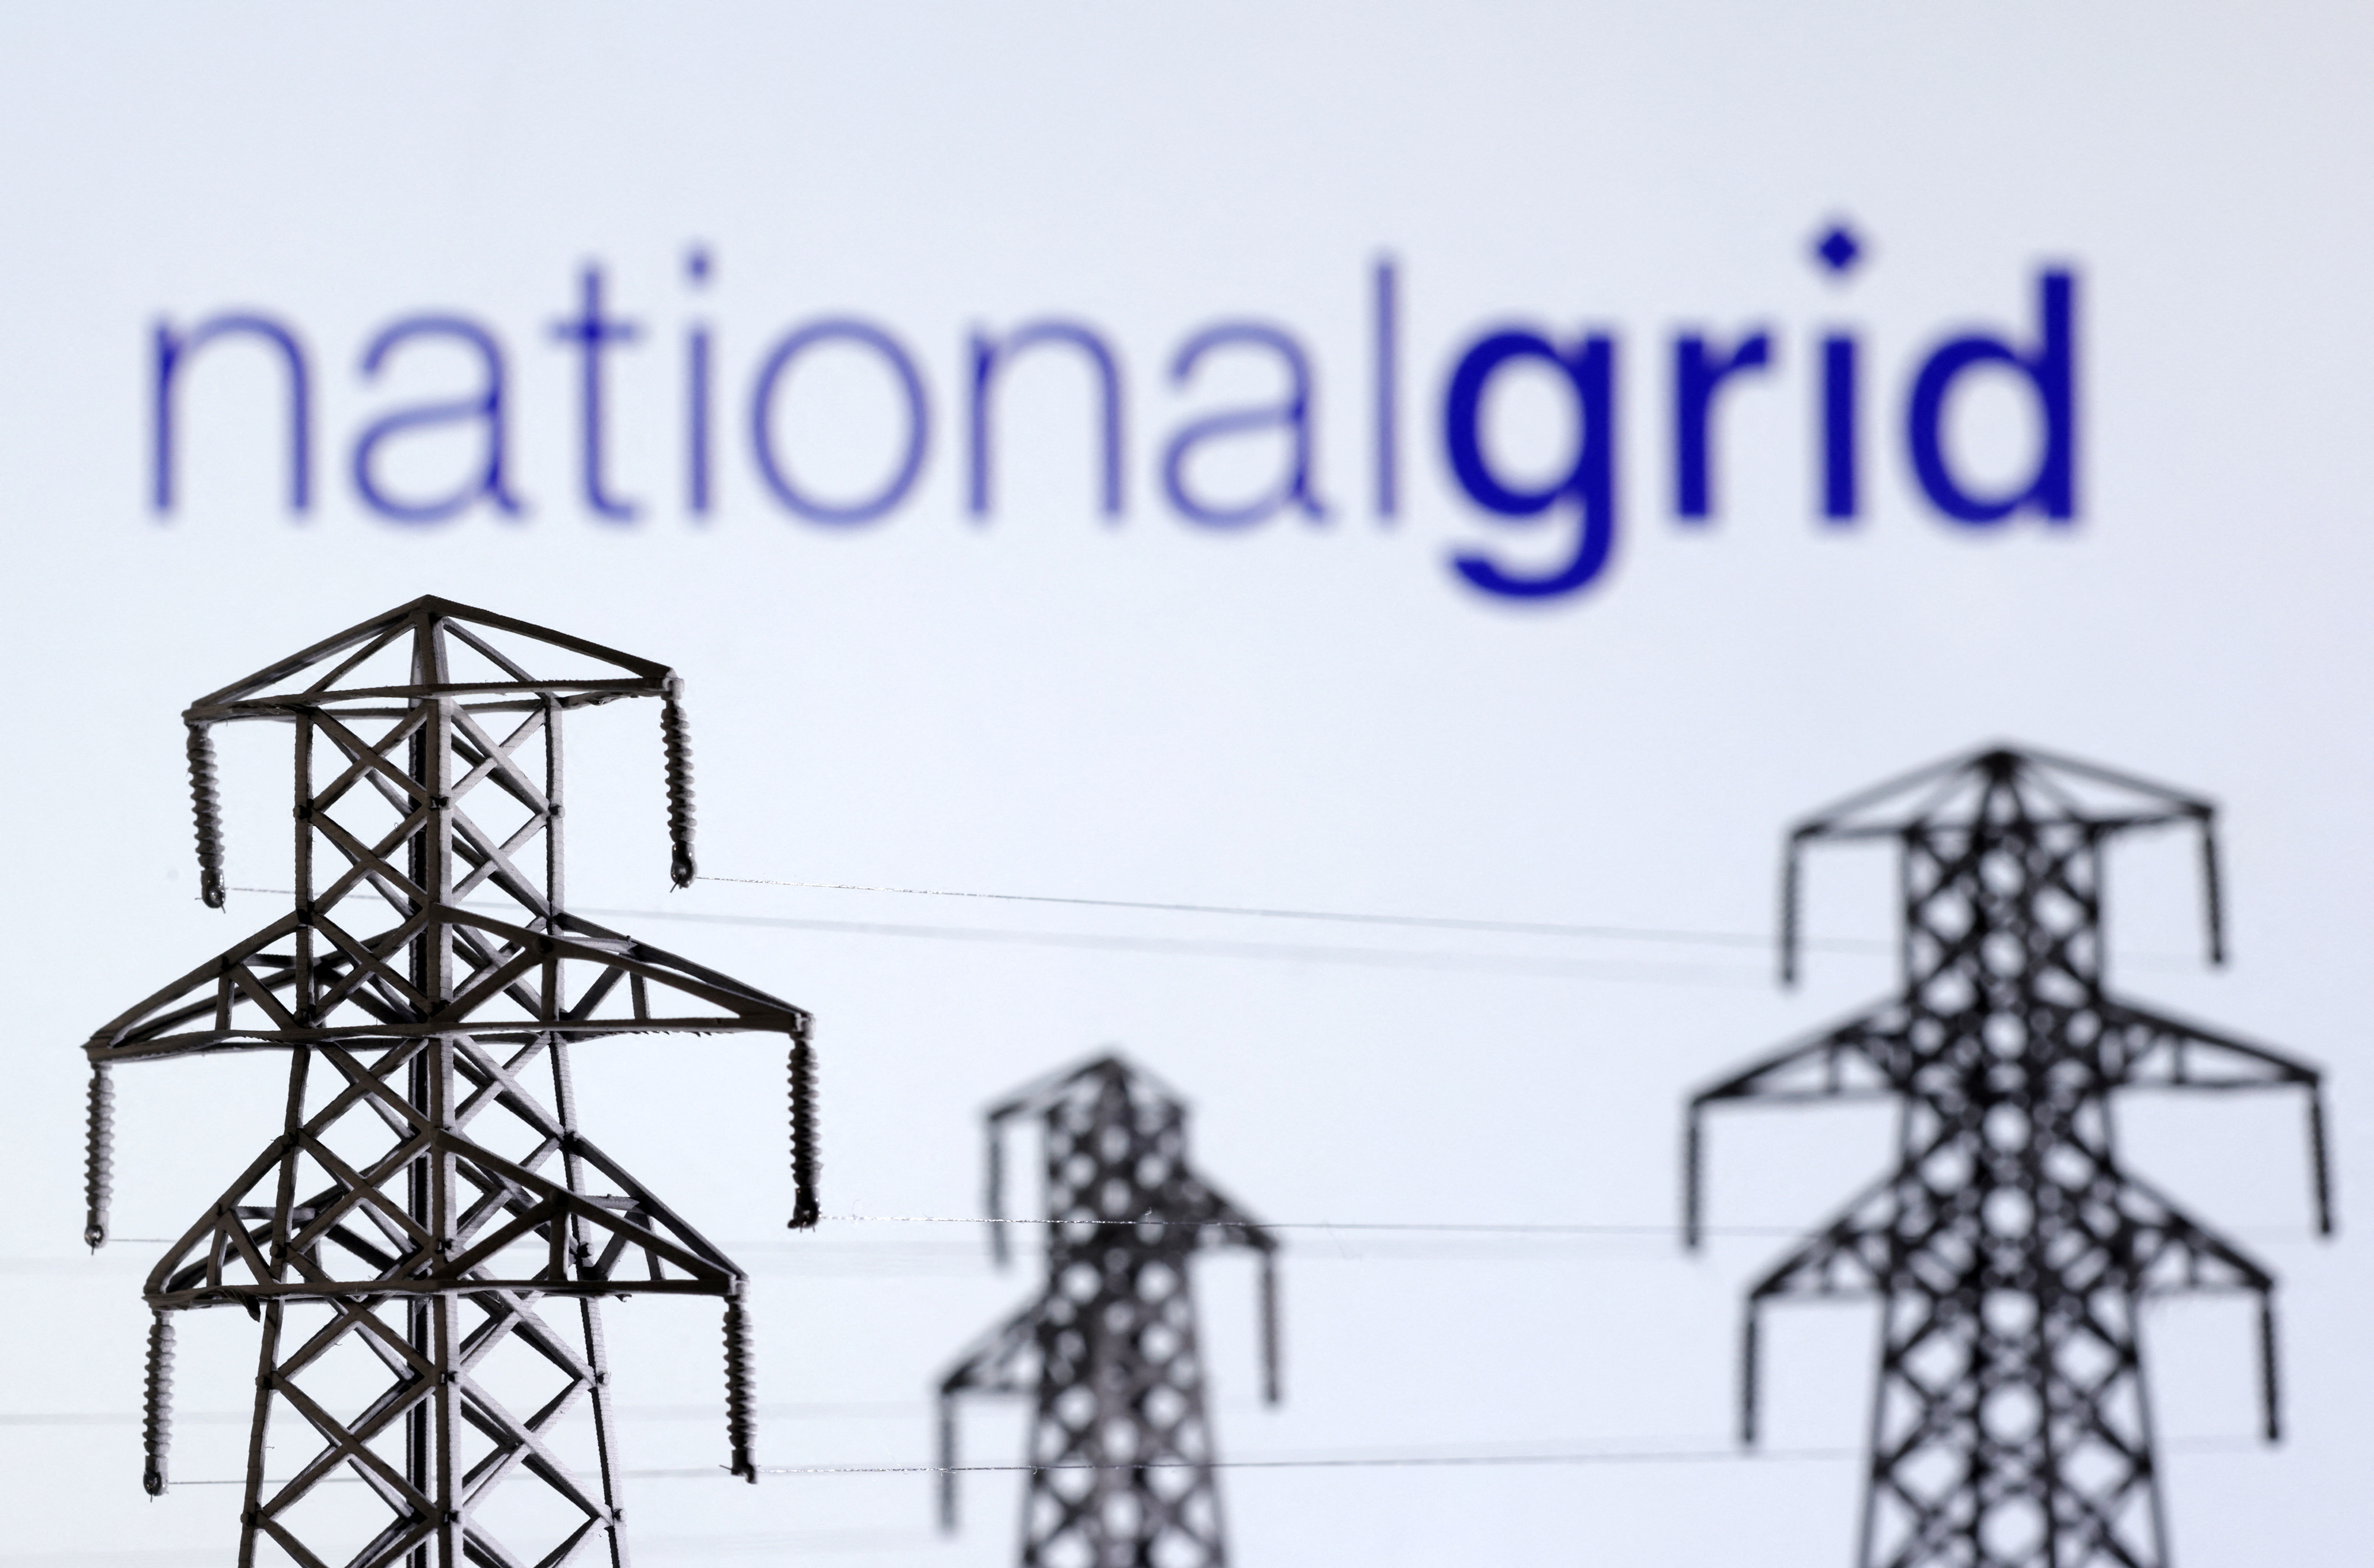 Illustration shows Electric power transmission pylon miniatures and National Grid logo